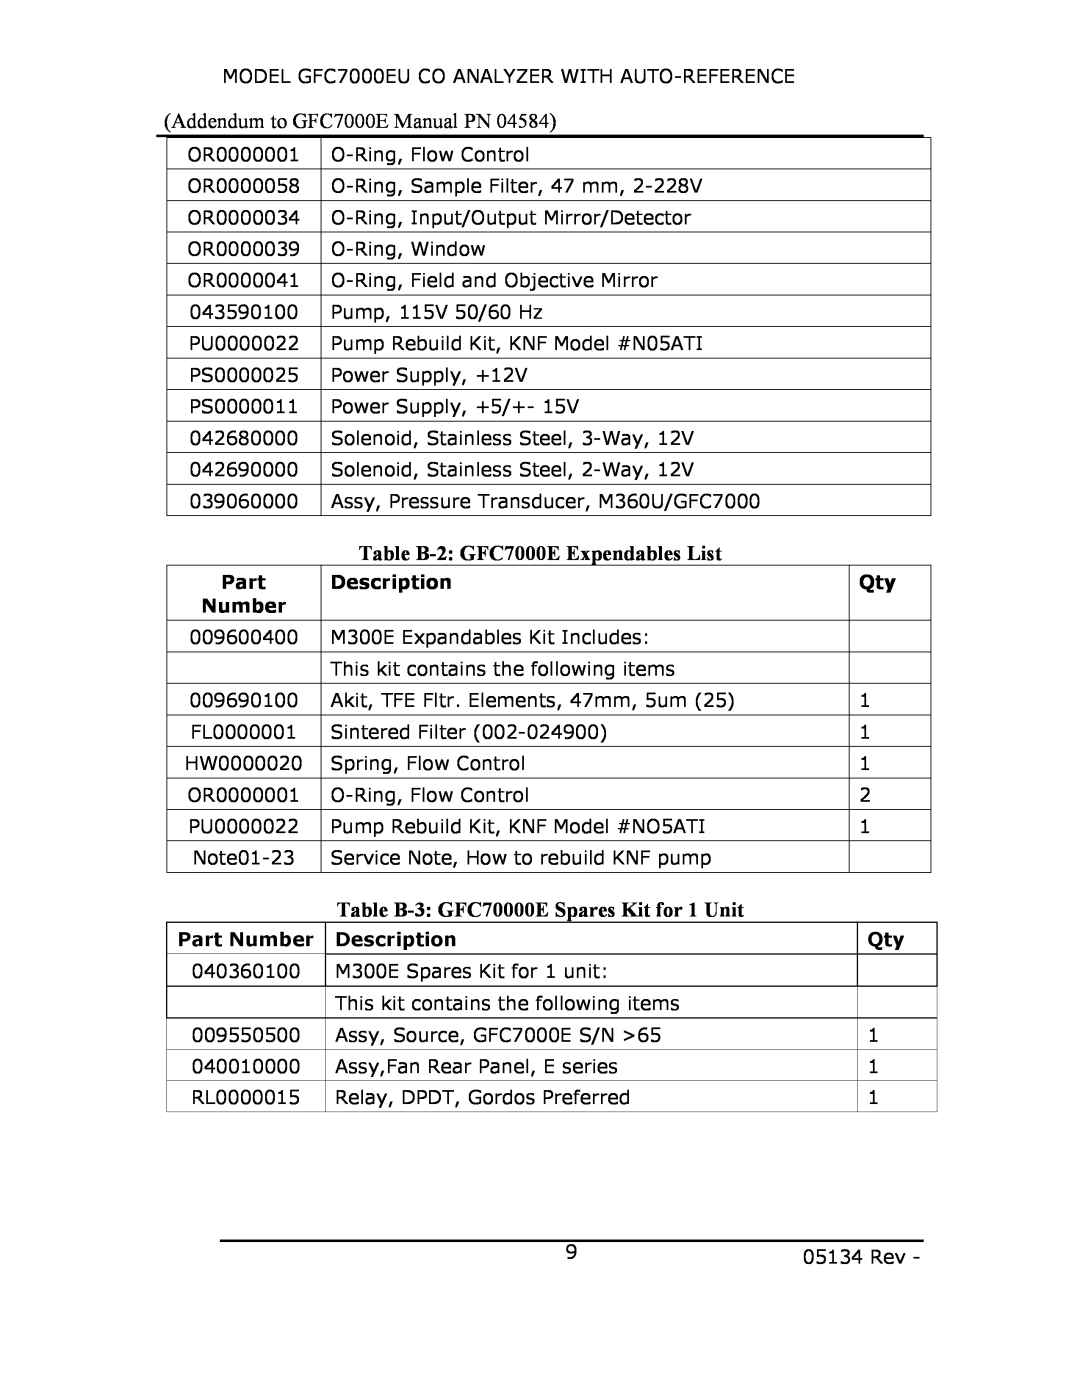 Teledyne GFC7000EU manual Description, Part Number 